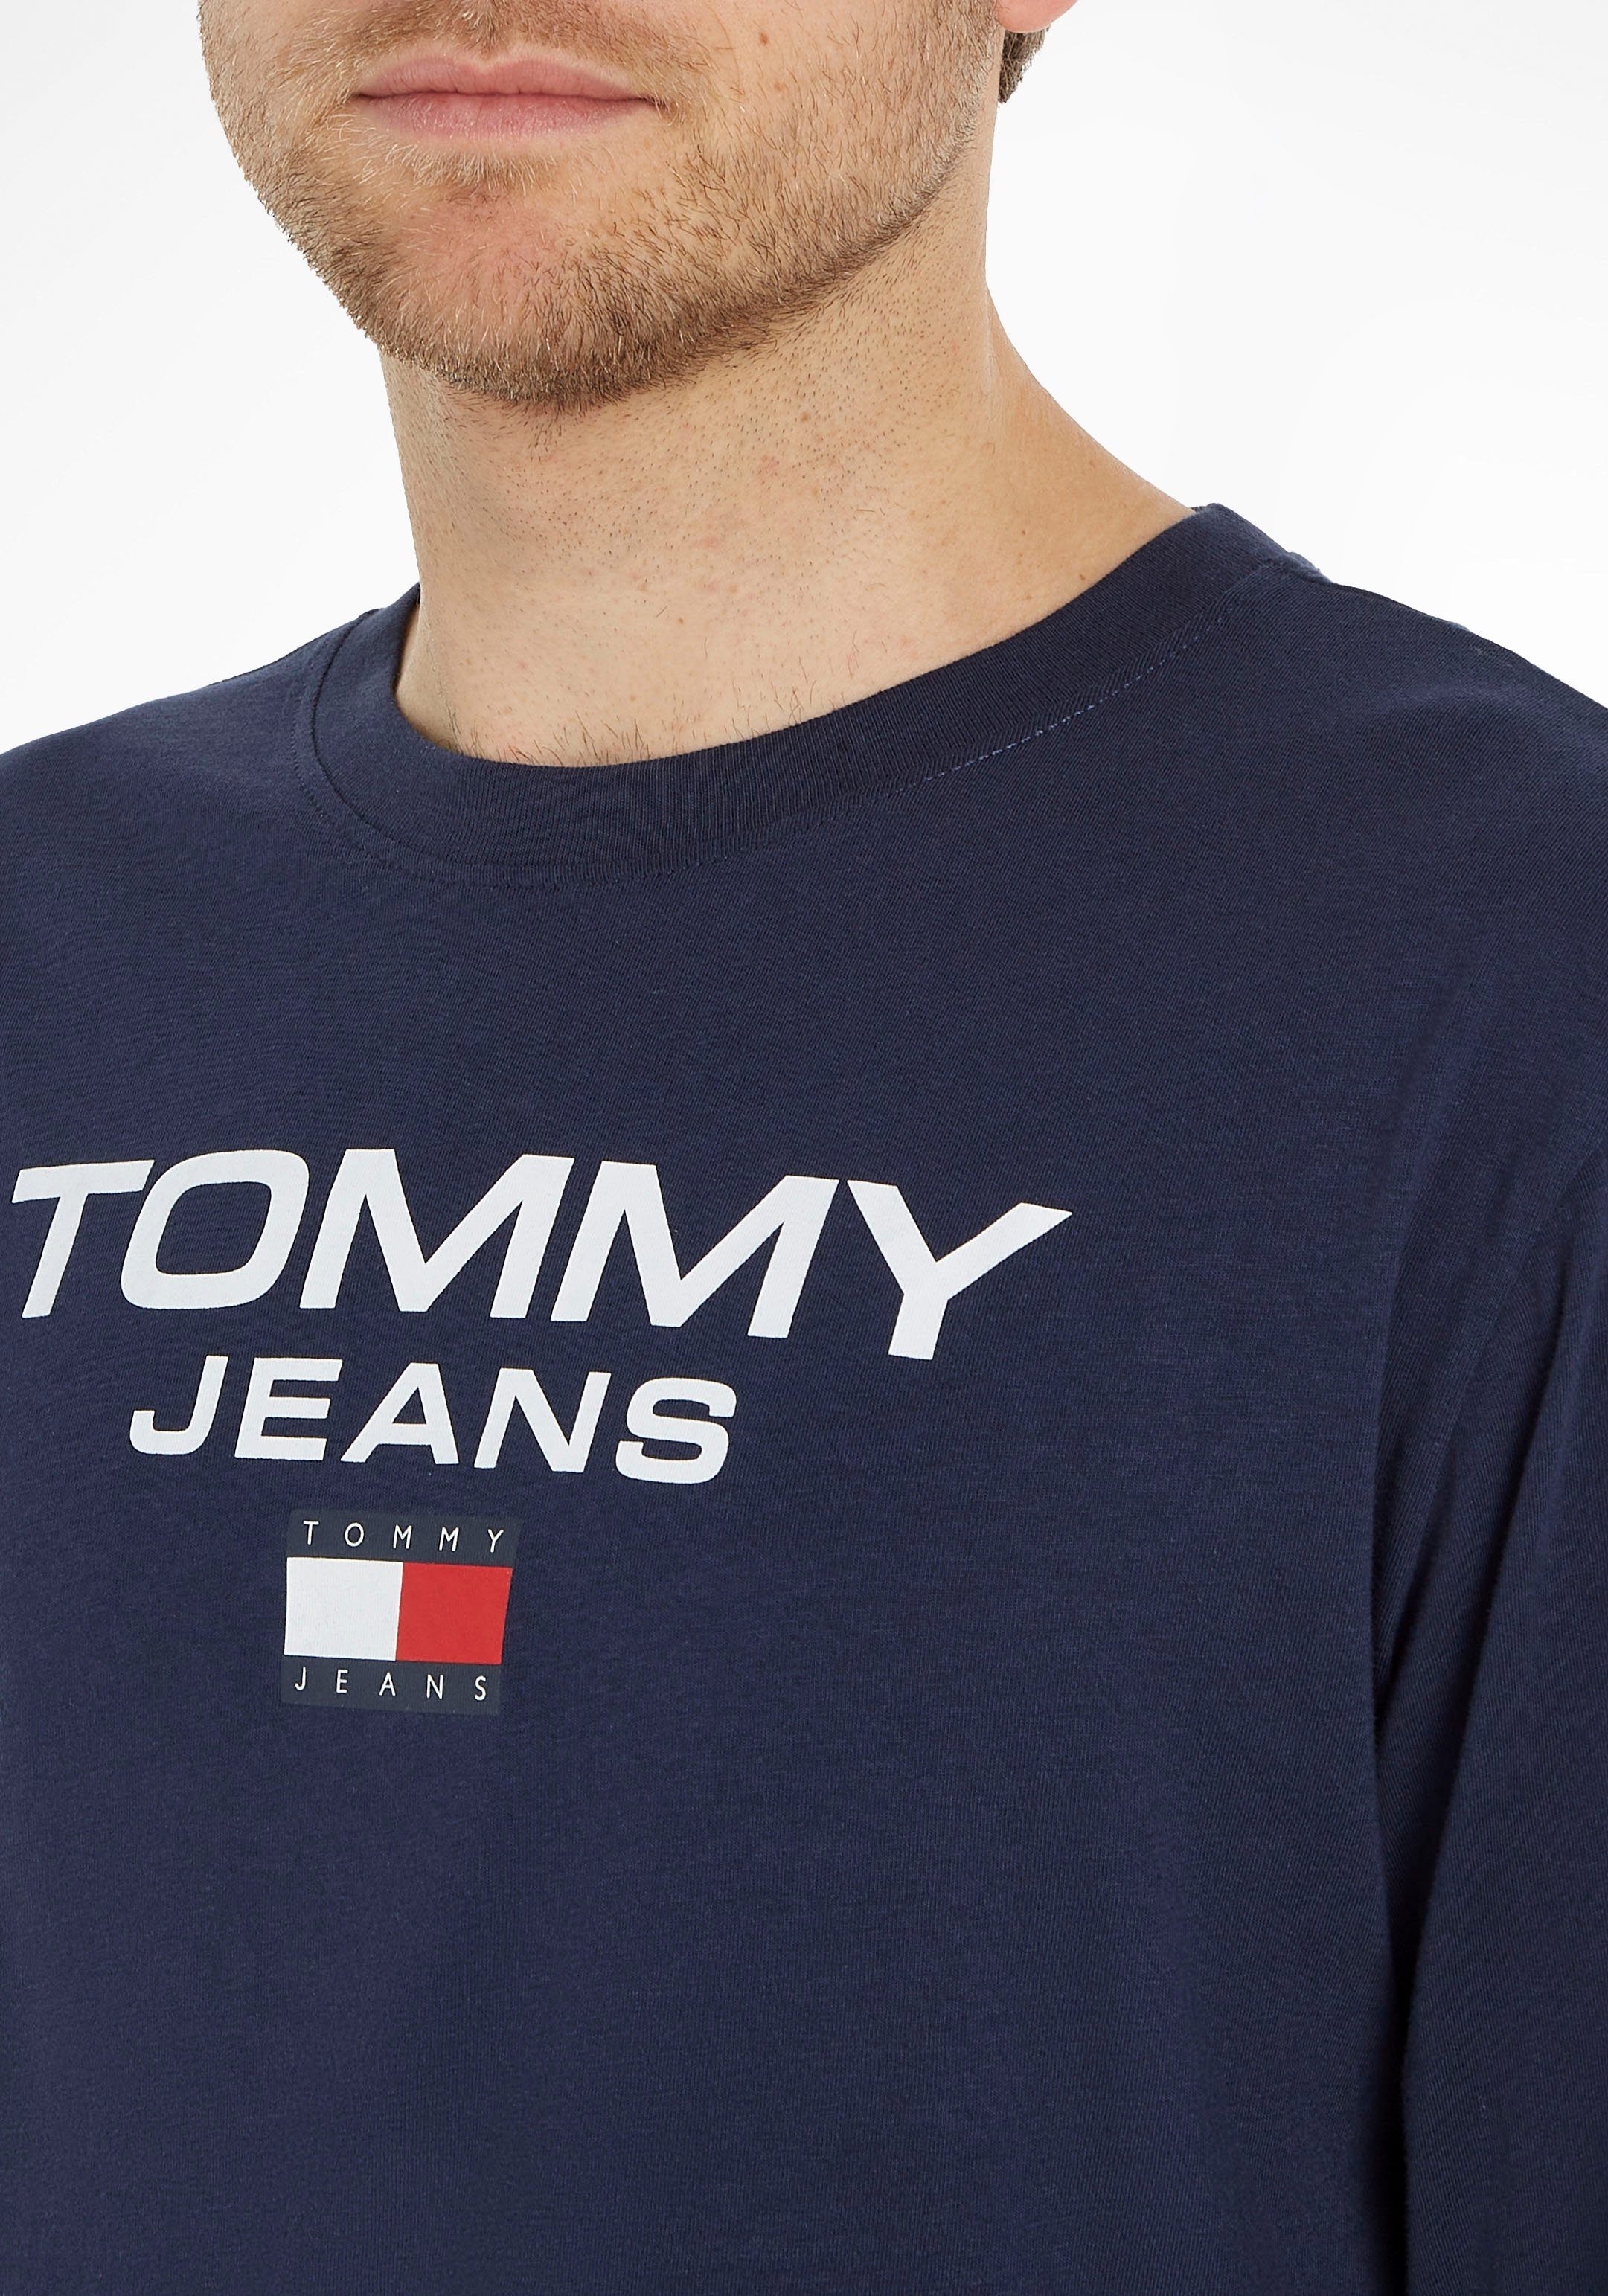 TEE ENTRY TJM Navy LS Jeans Tommy Logodruck mit Twilight CLSC Langarmshirt